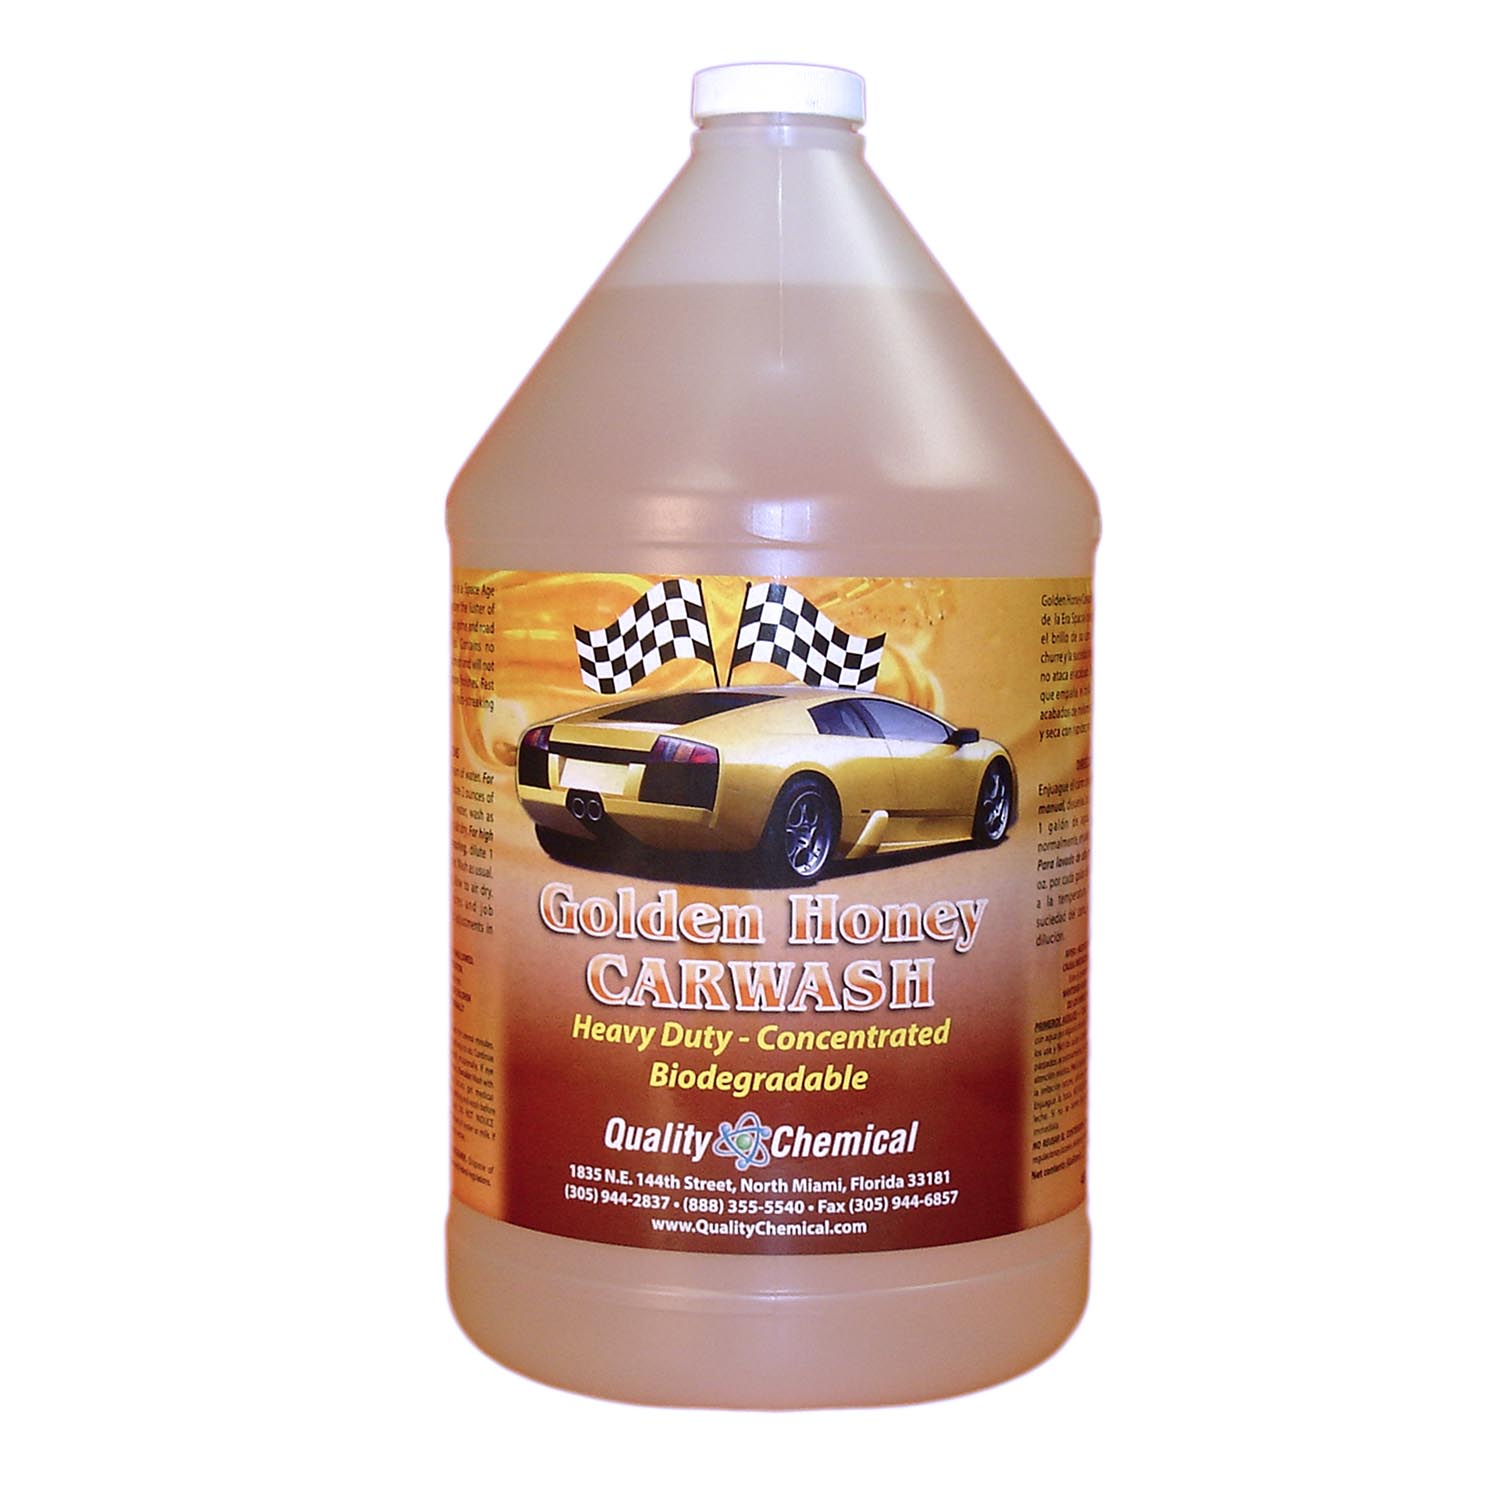 Golden Honey Car Wash